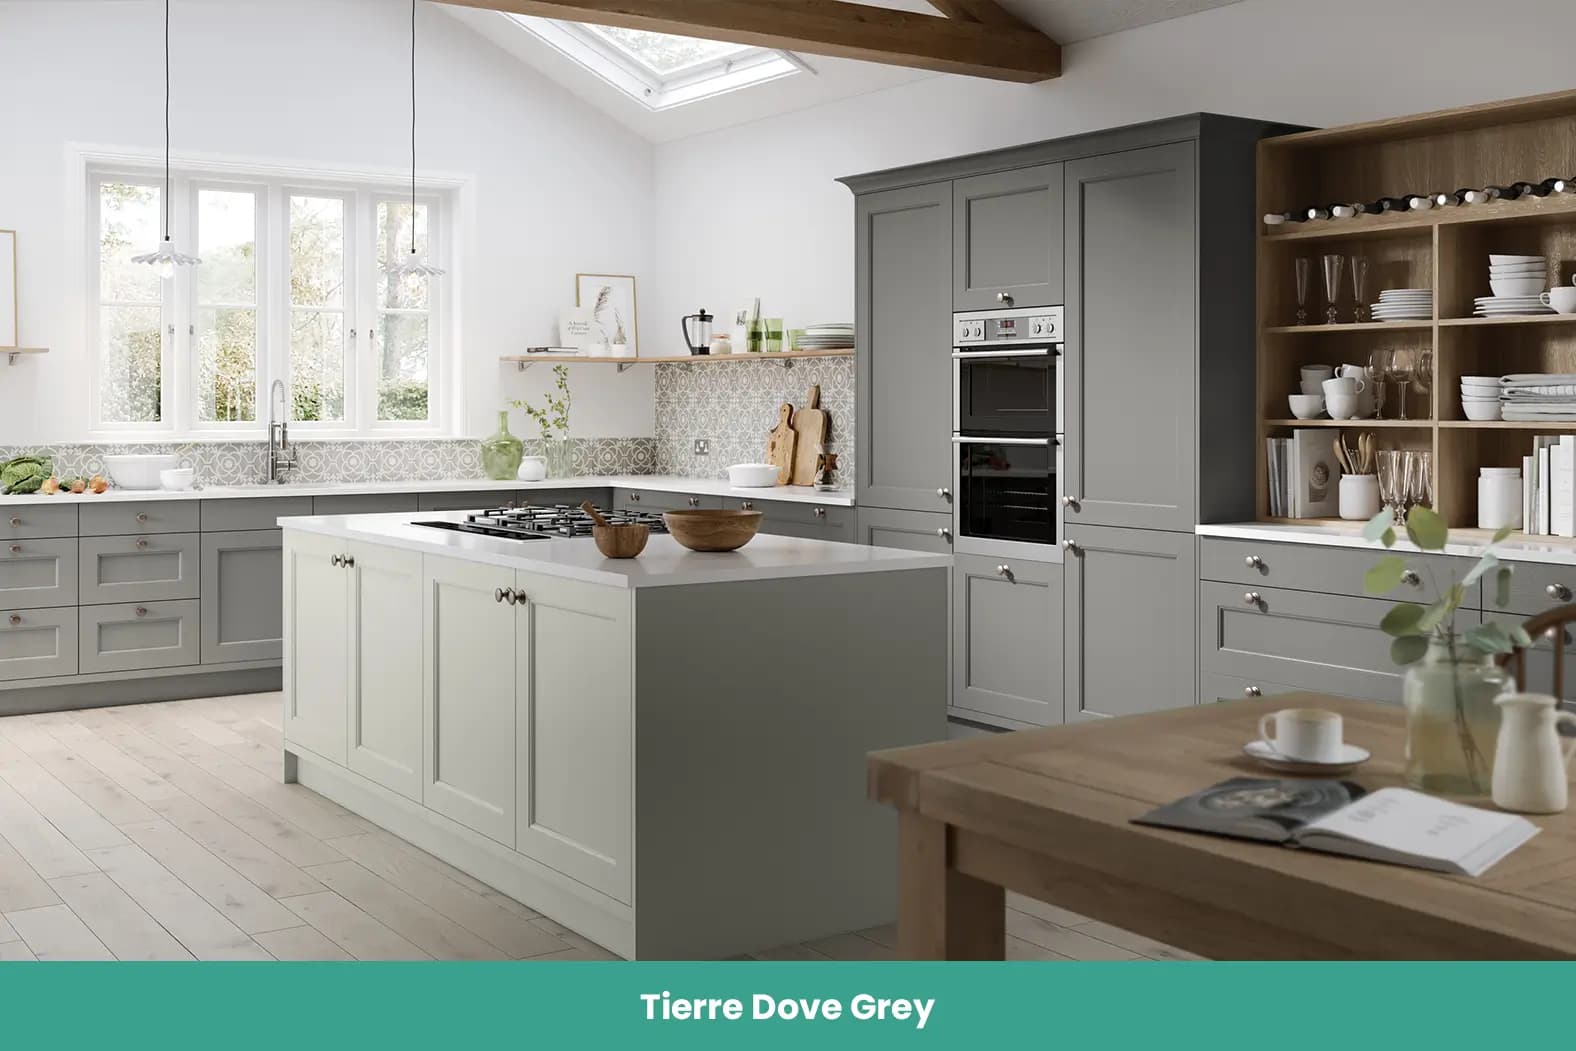 Tierre Dove Grey kitchen